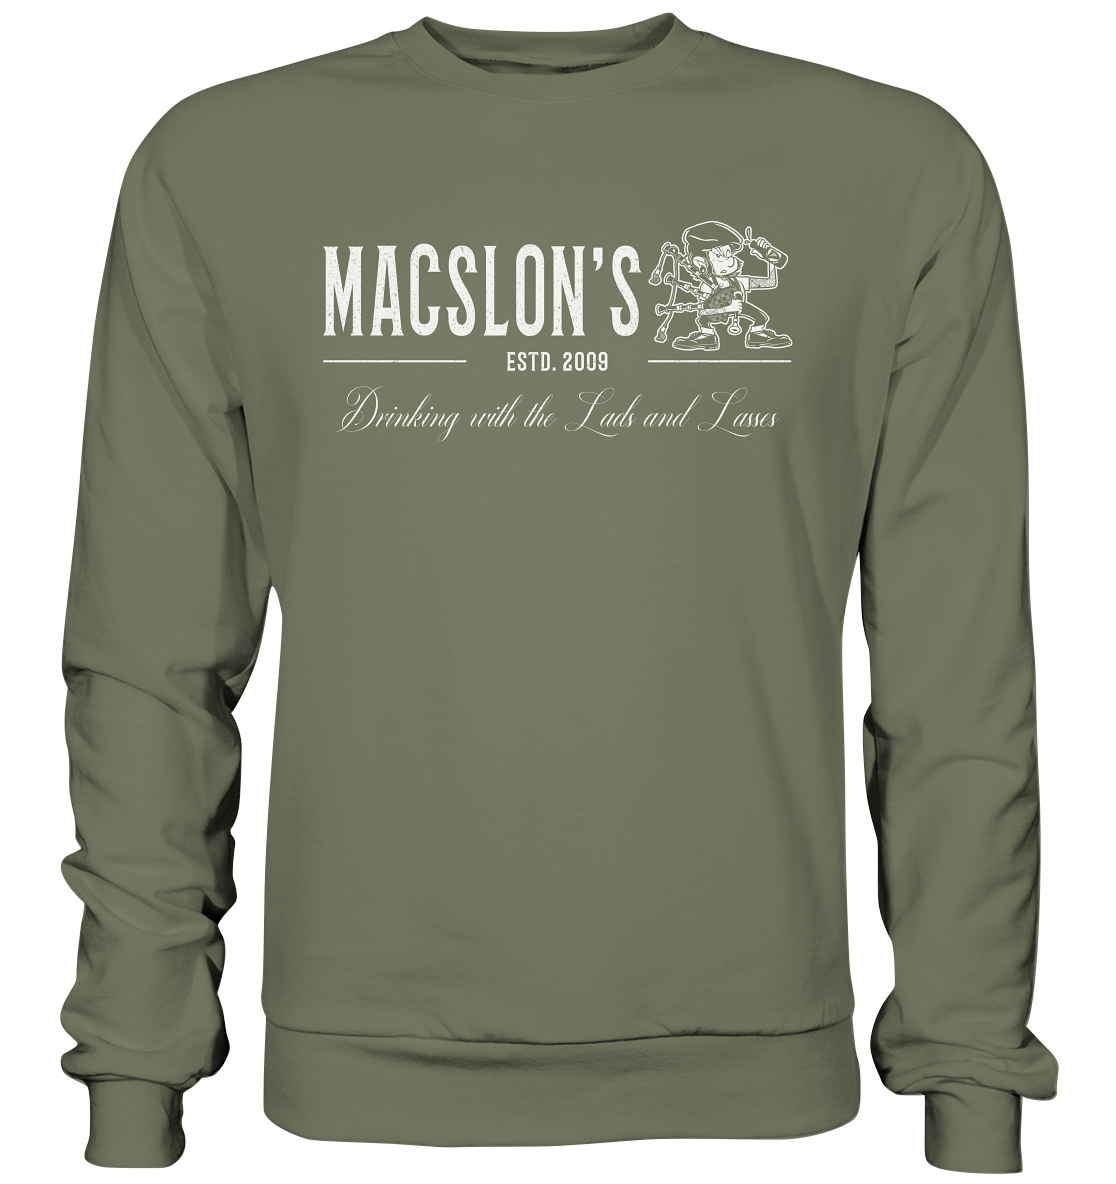 MacSlon's "Drinking With The Lads & Lasses" - Premium Sweatshirt